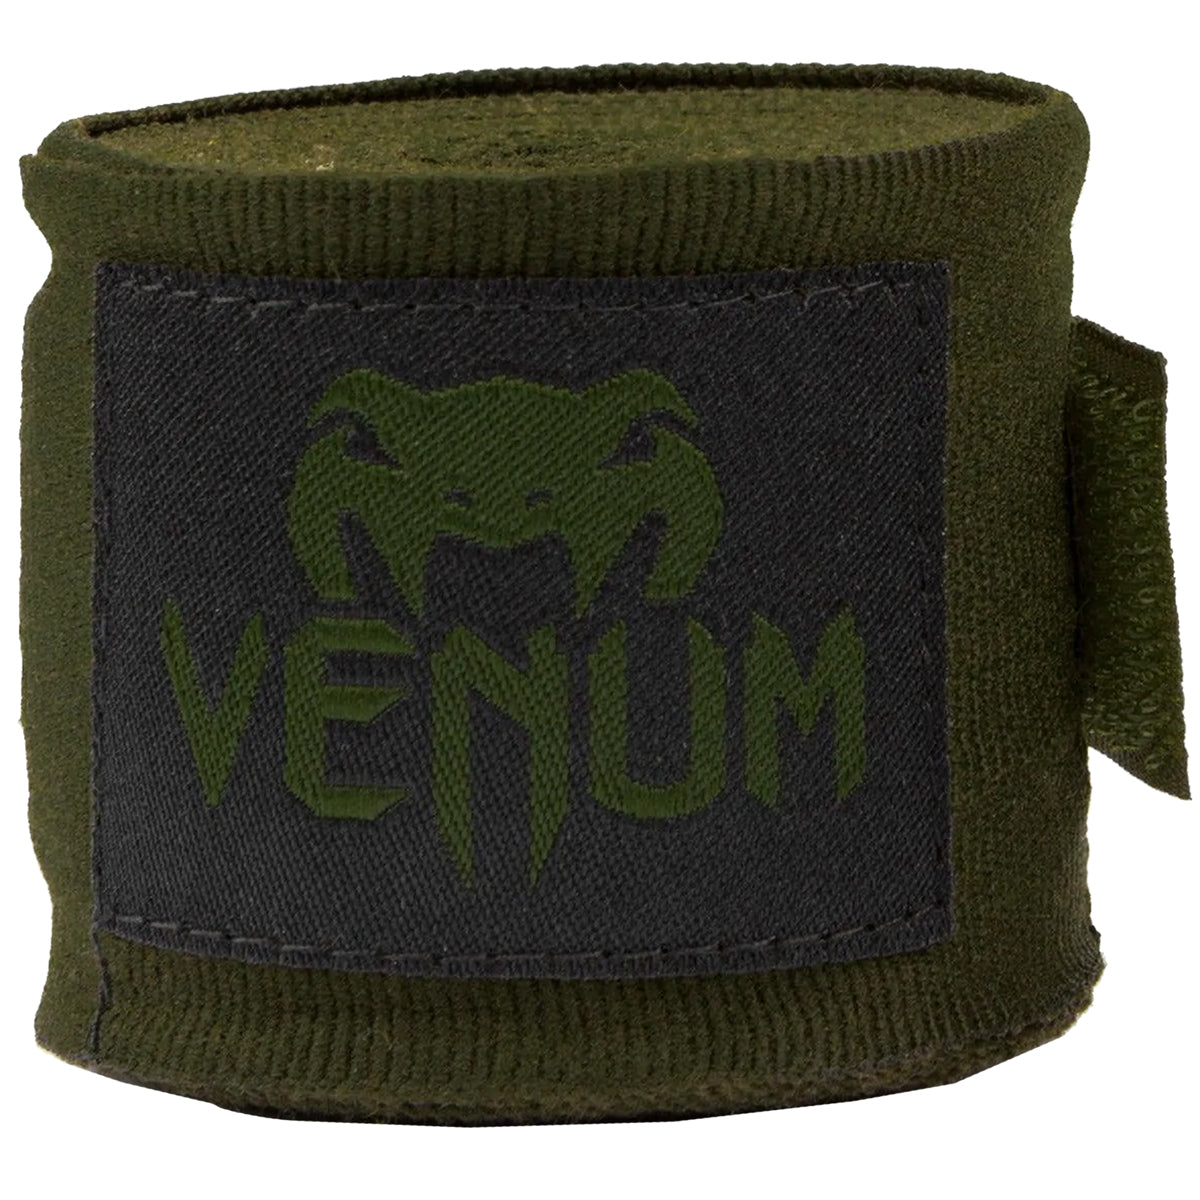 Venum Kontact 4m Boxing Handwraps - Khaki/Black Venum